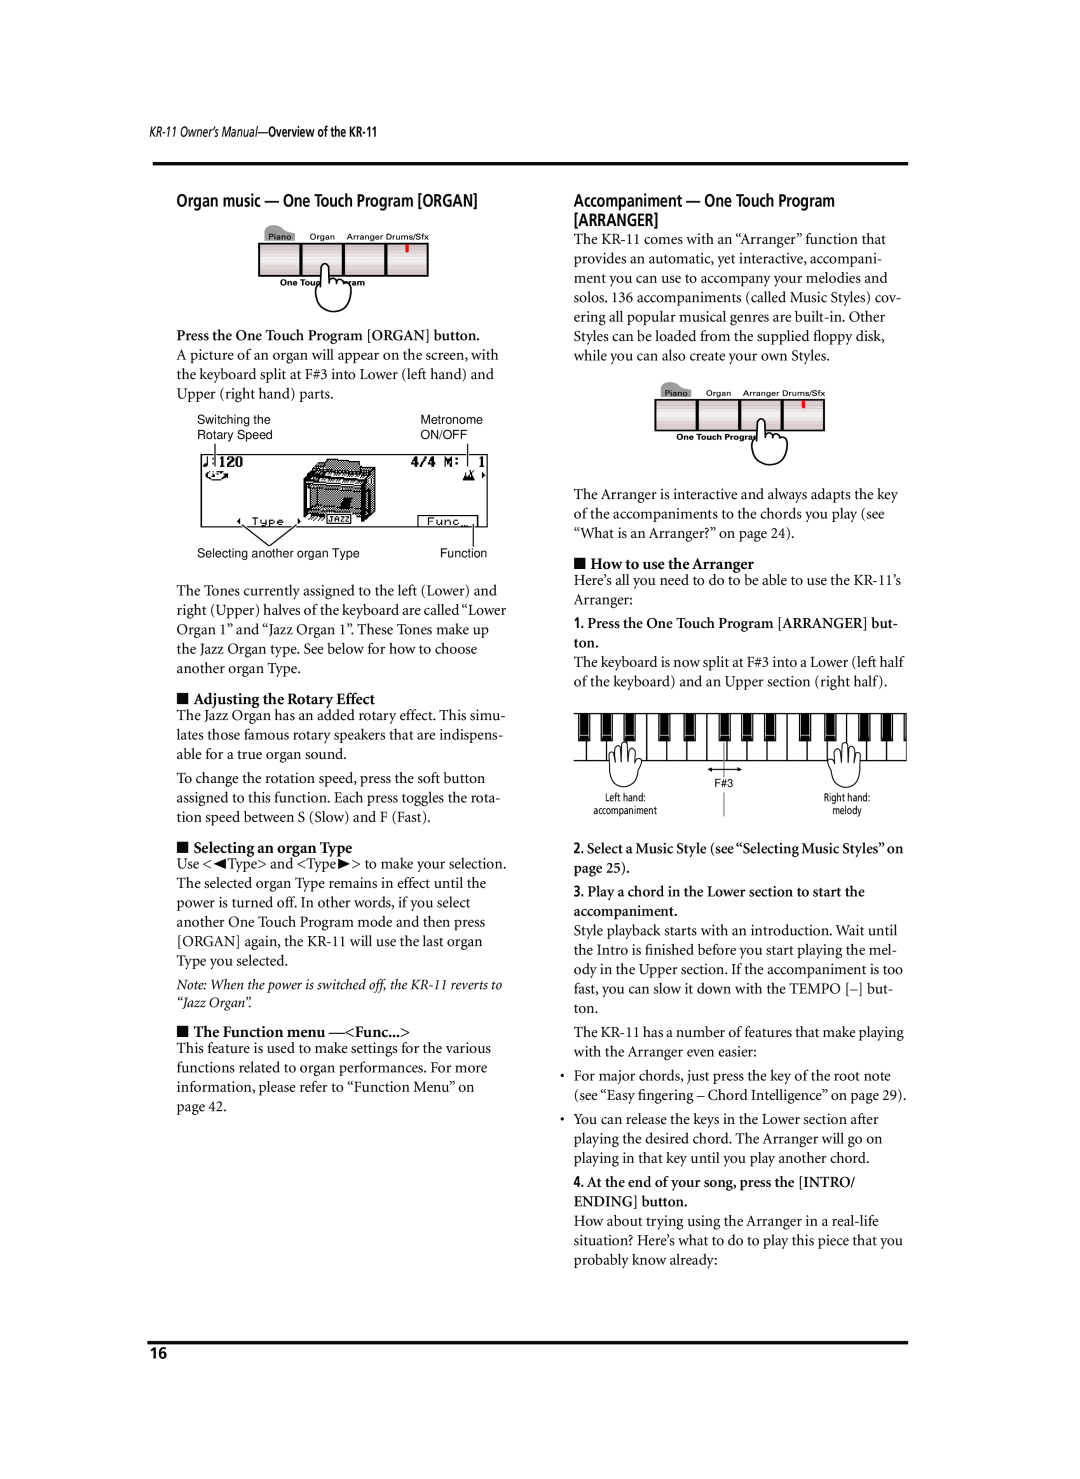 Roland KR-11 owner manual Accompaniment - One Touch Program ARRANGER, Organ music - One Touch Program ORGAN 